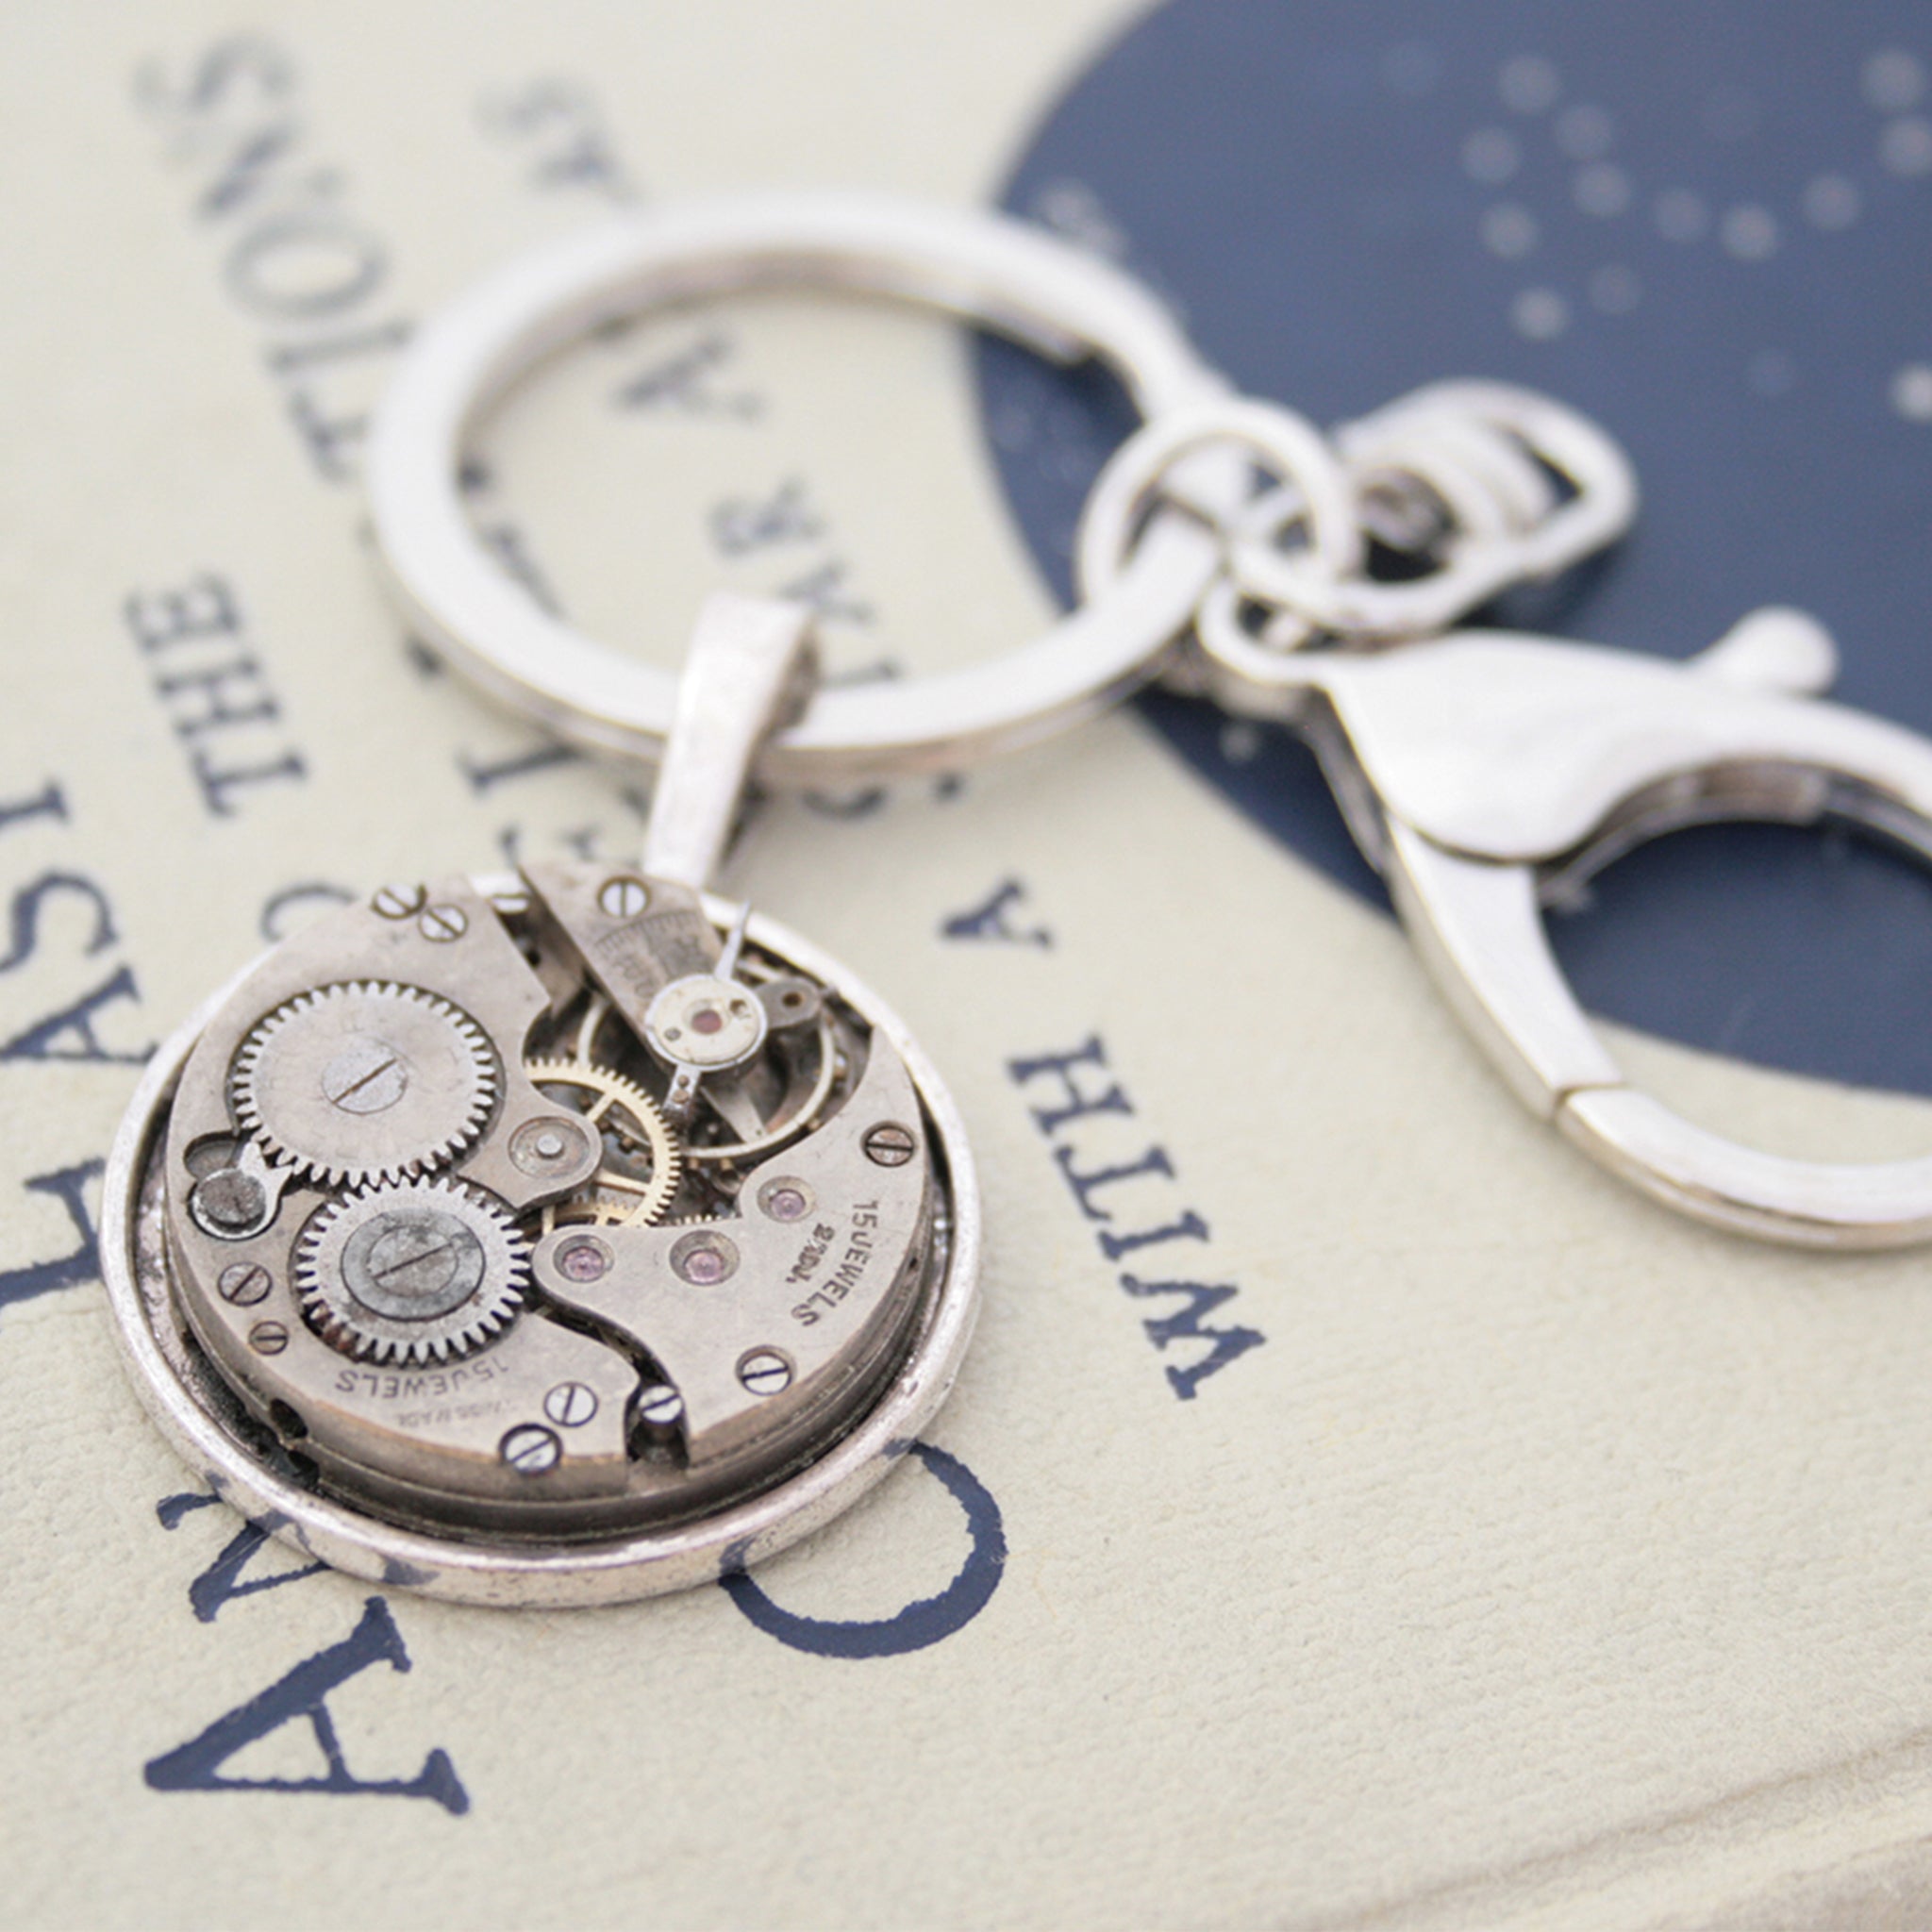 Steampunk keychain made of Swiss watch movement